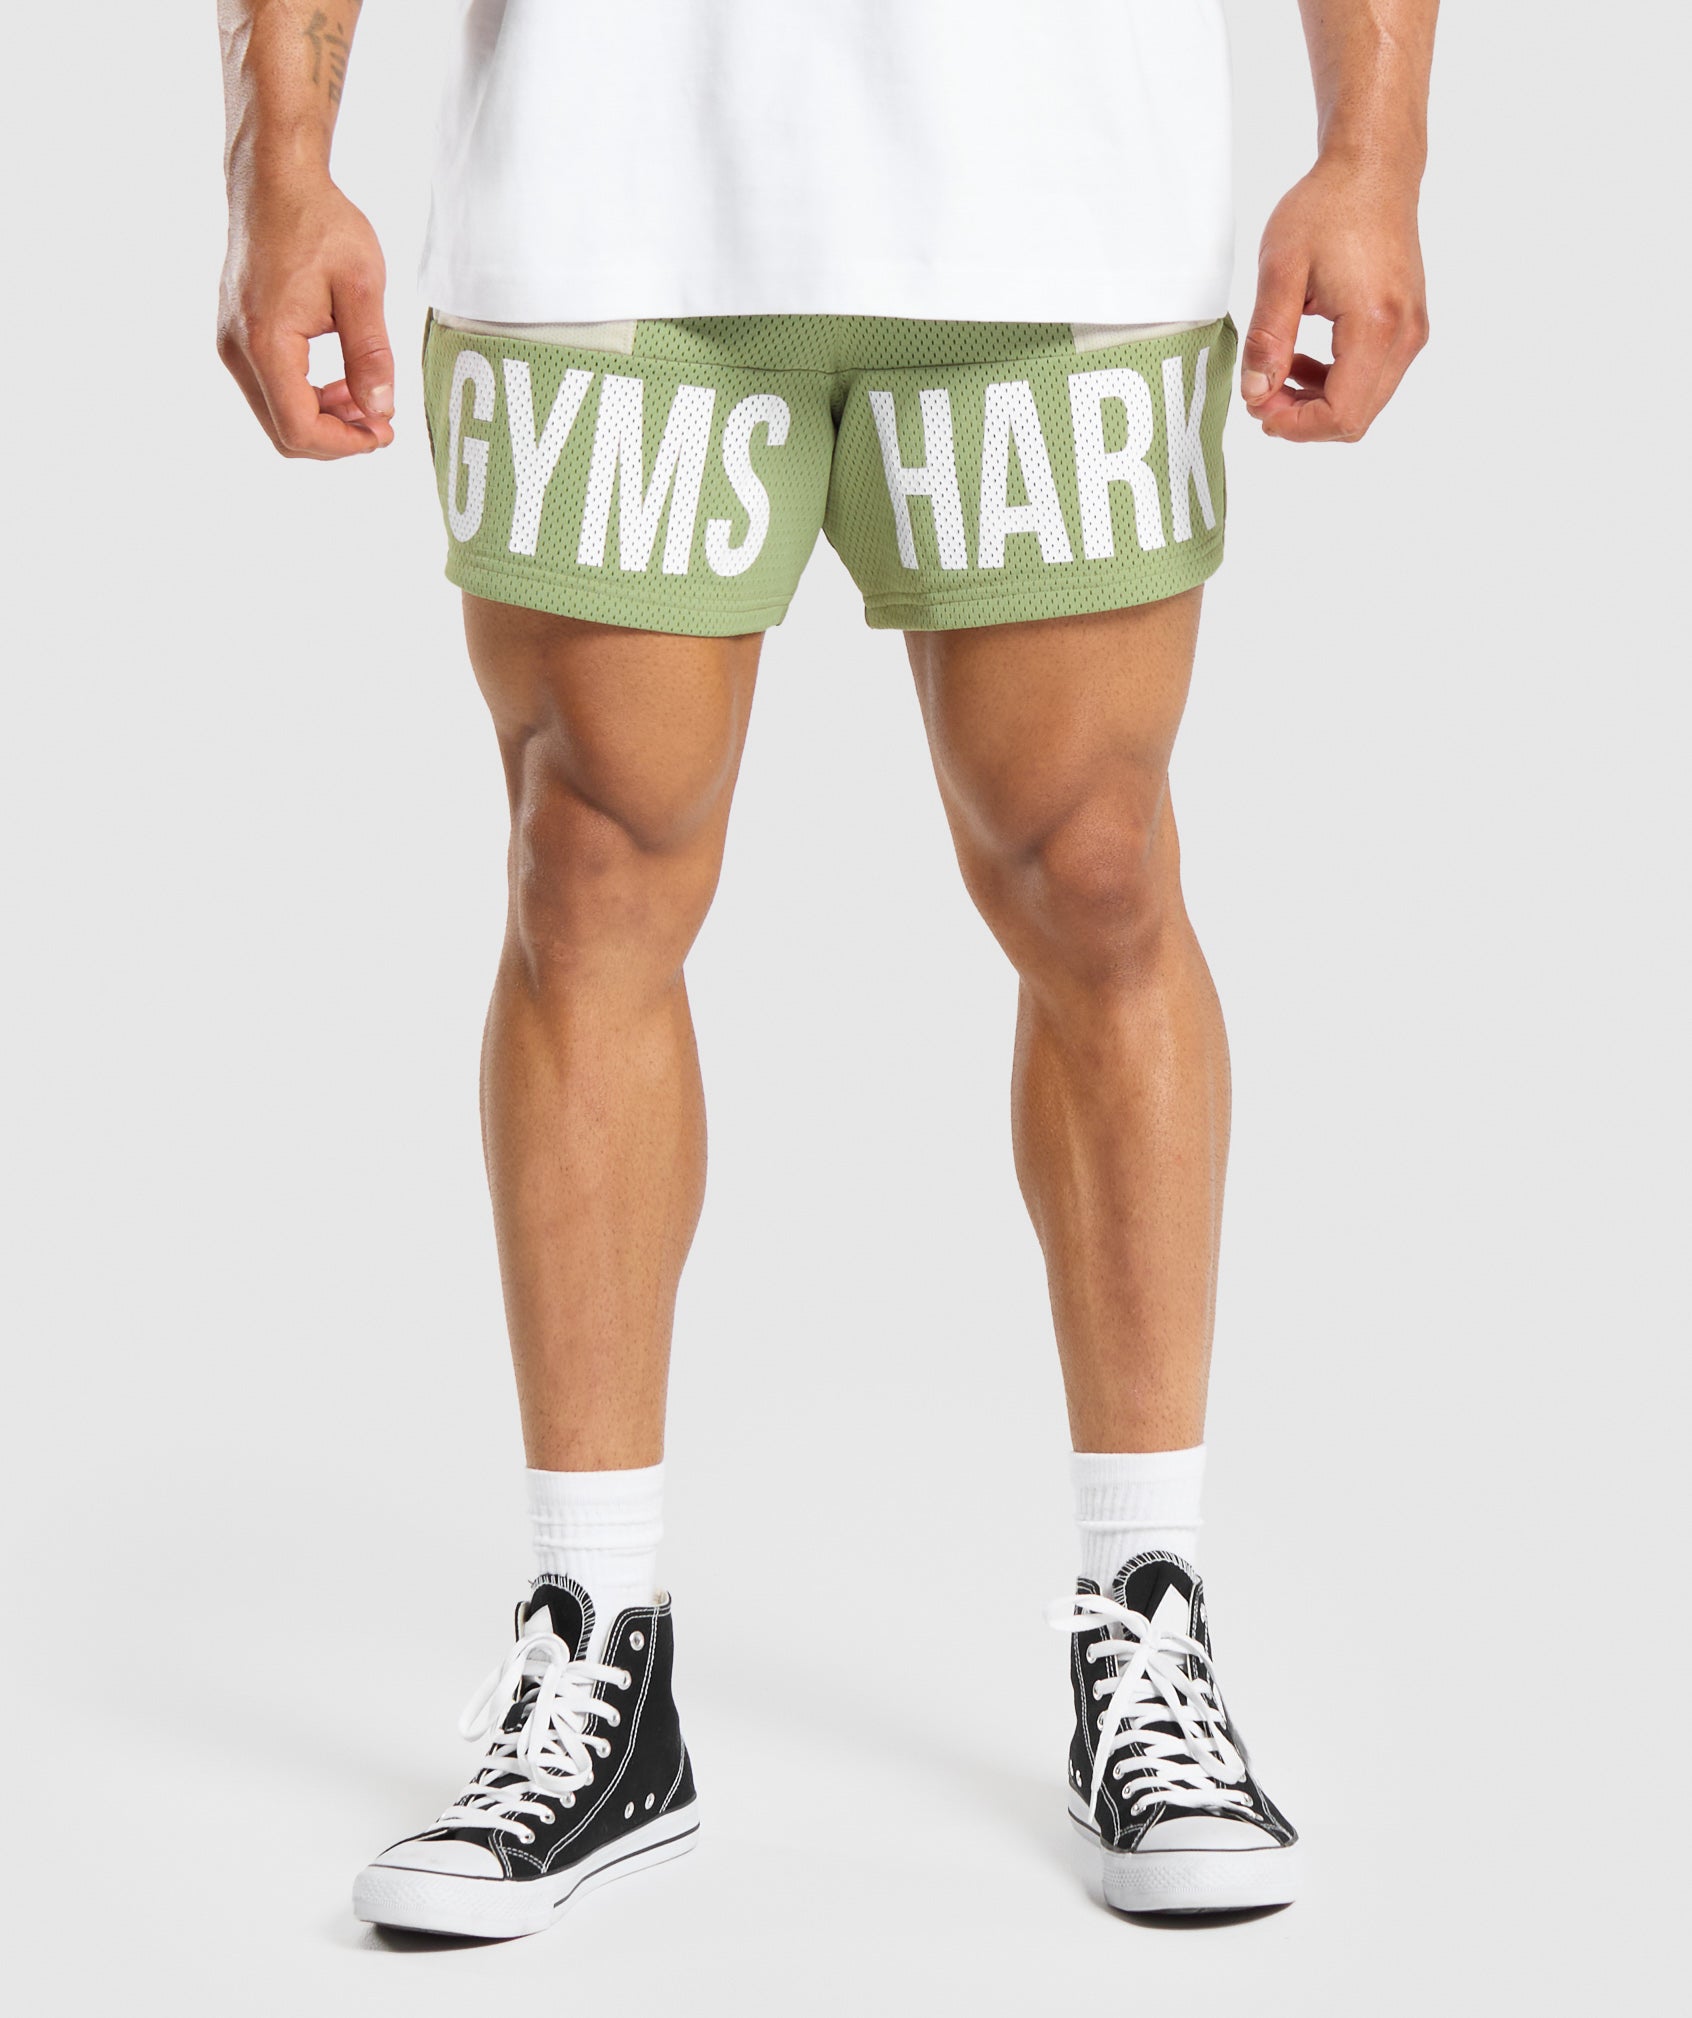 Brandmark Mesh 5" Shorts in Natural Sage Green/Pebble Grey - view 1